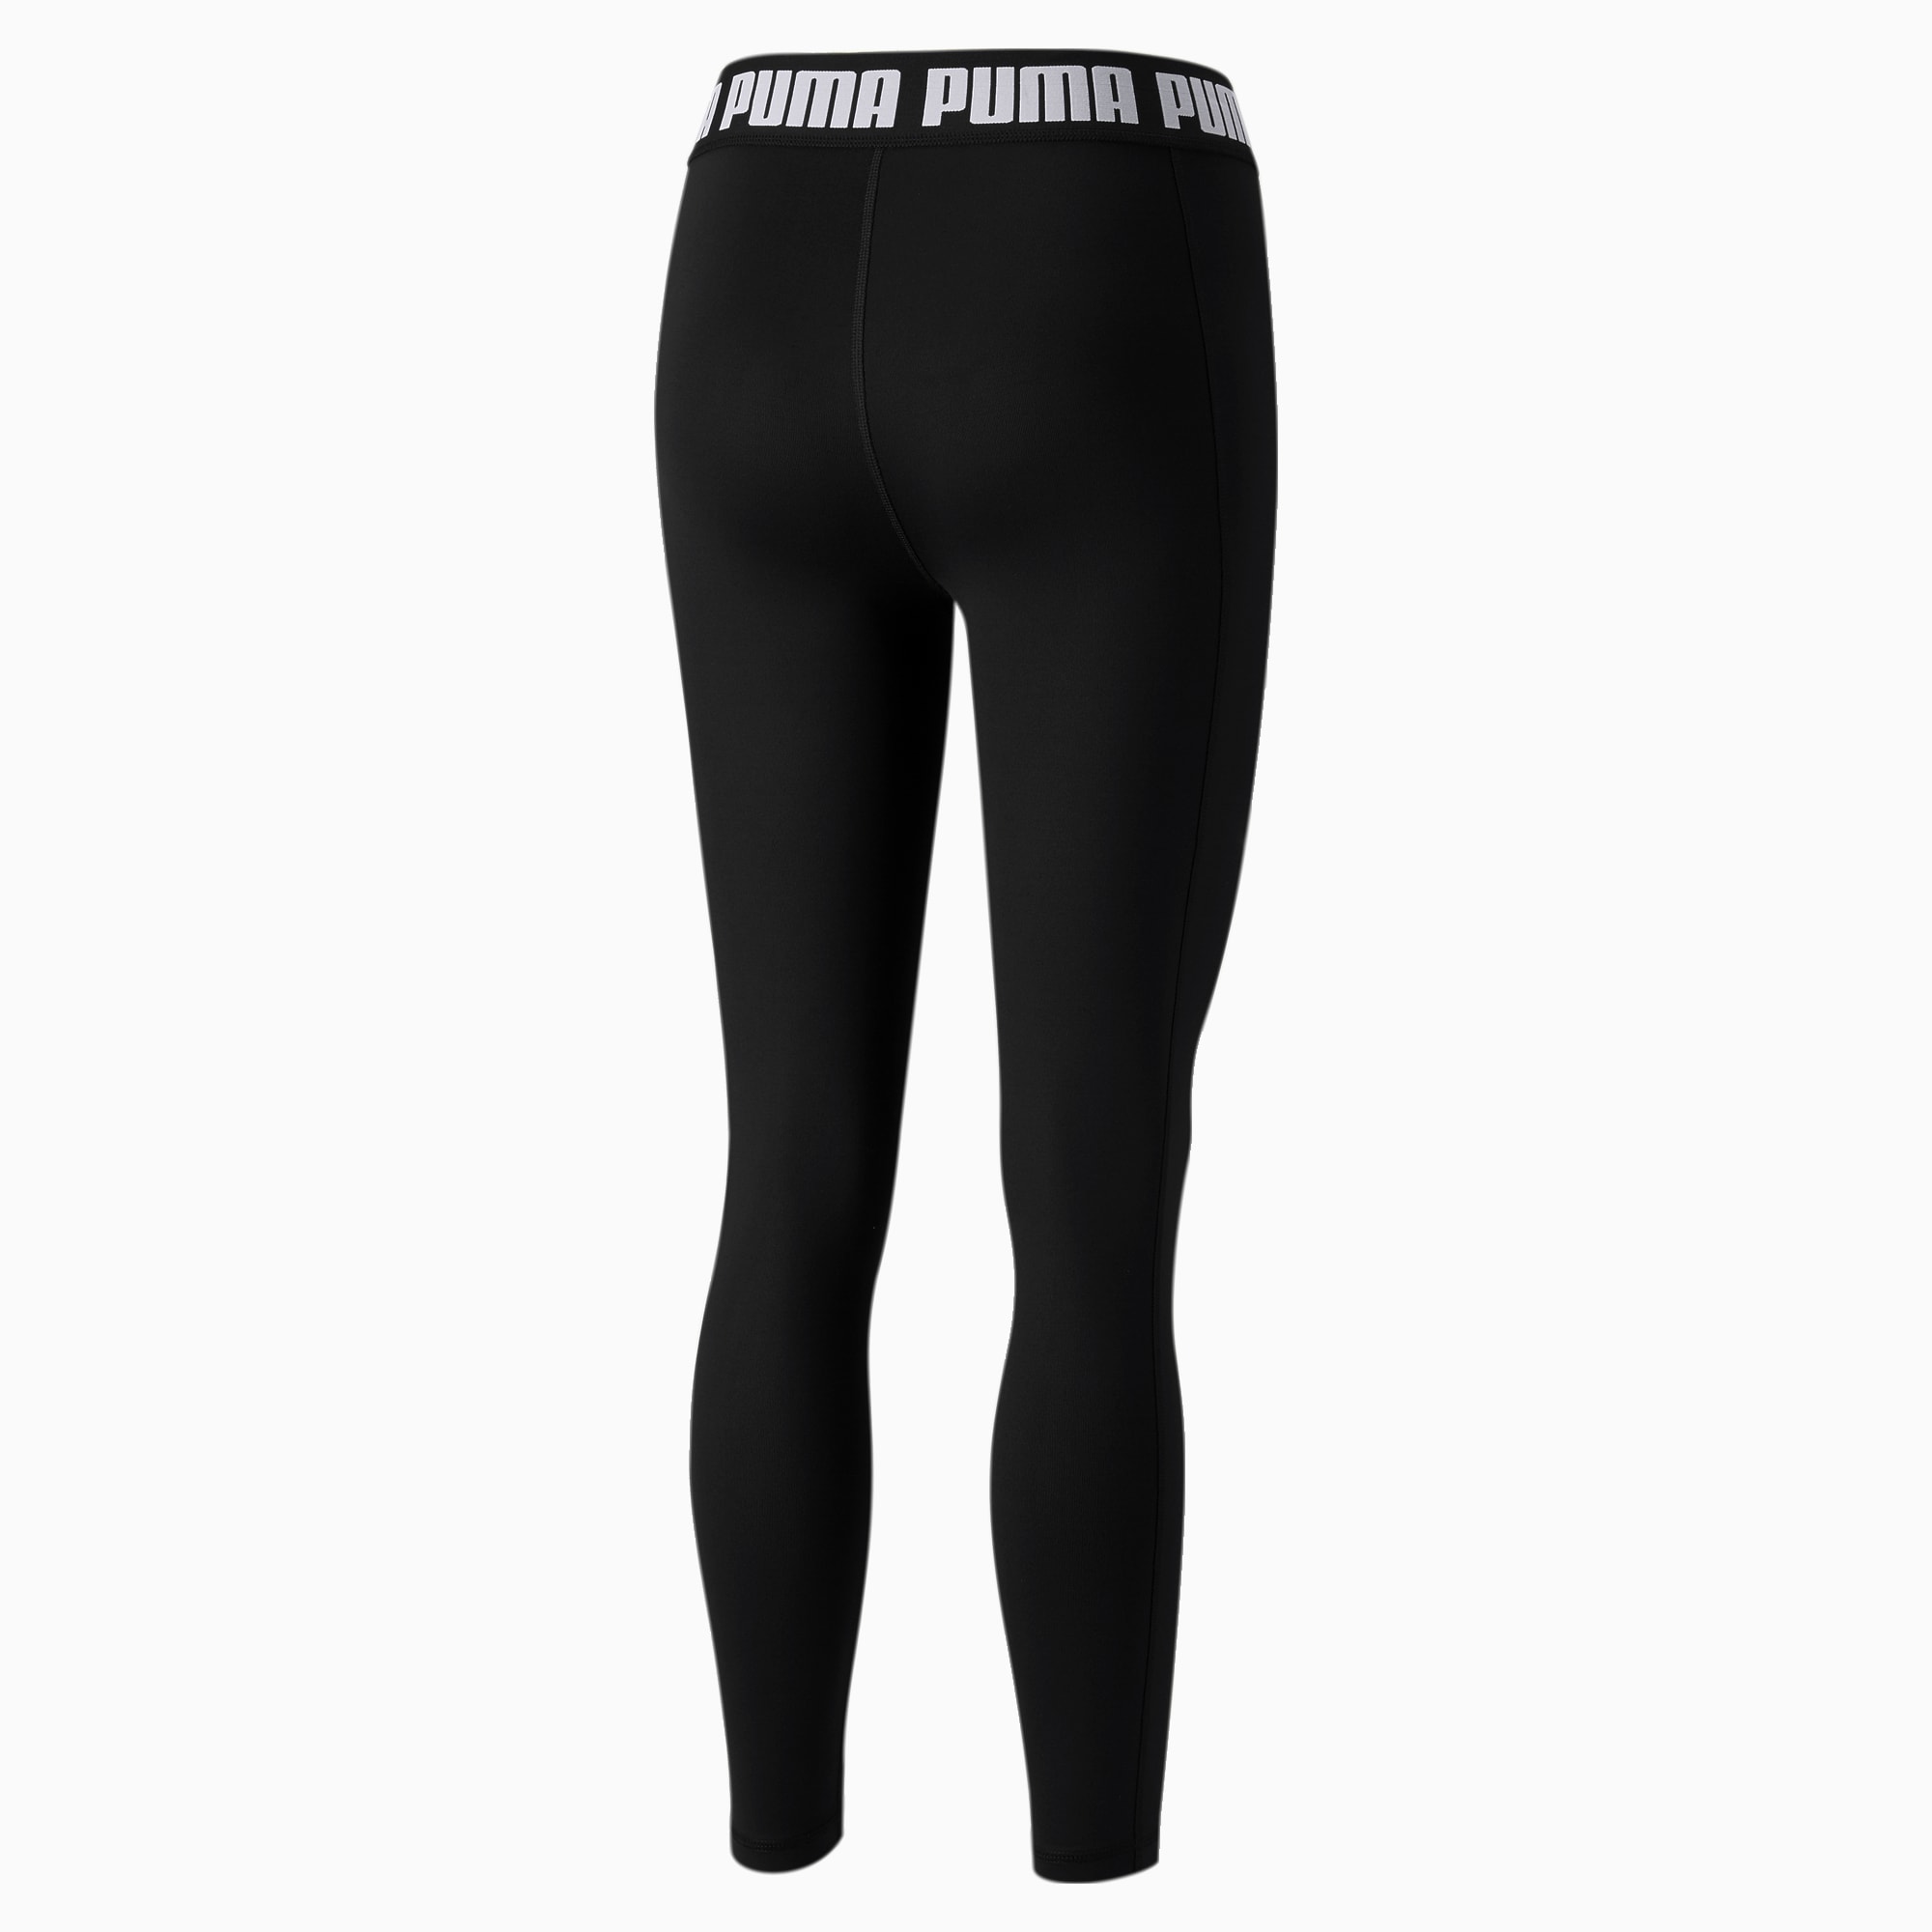 PUMA Strong High Waisted Women's Training Leggings, Black, Size S, Clothing